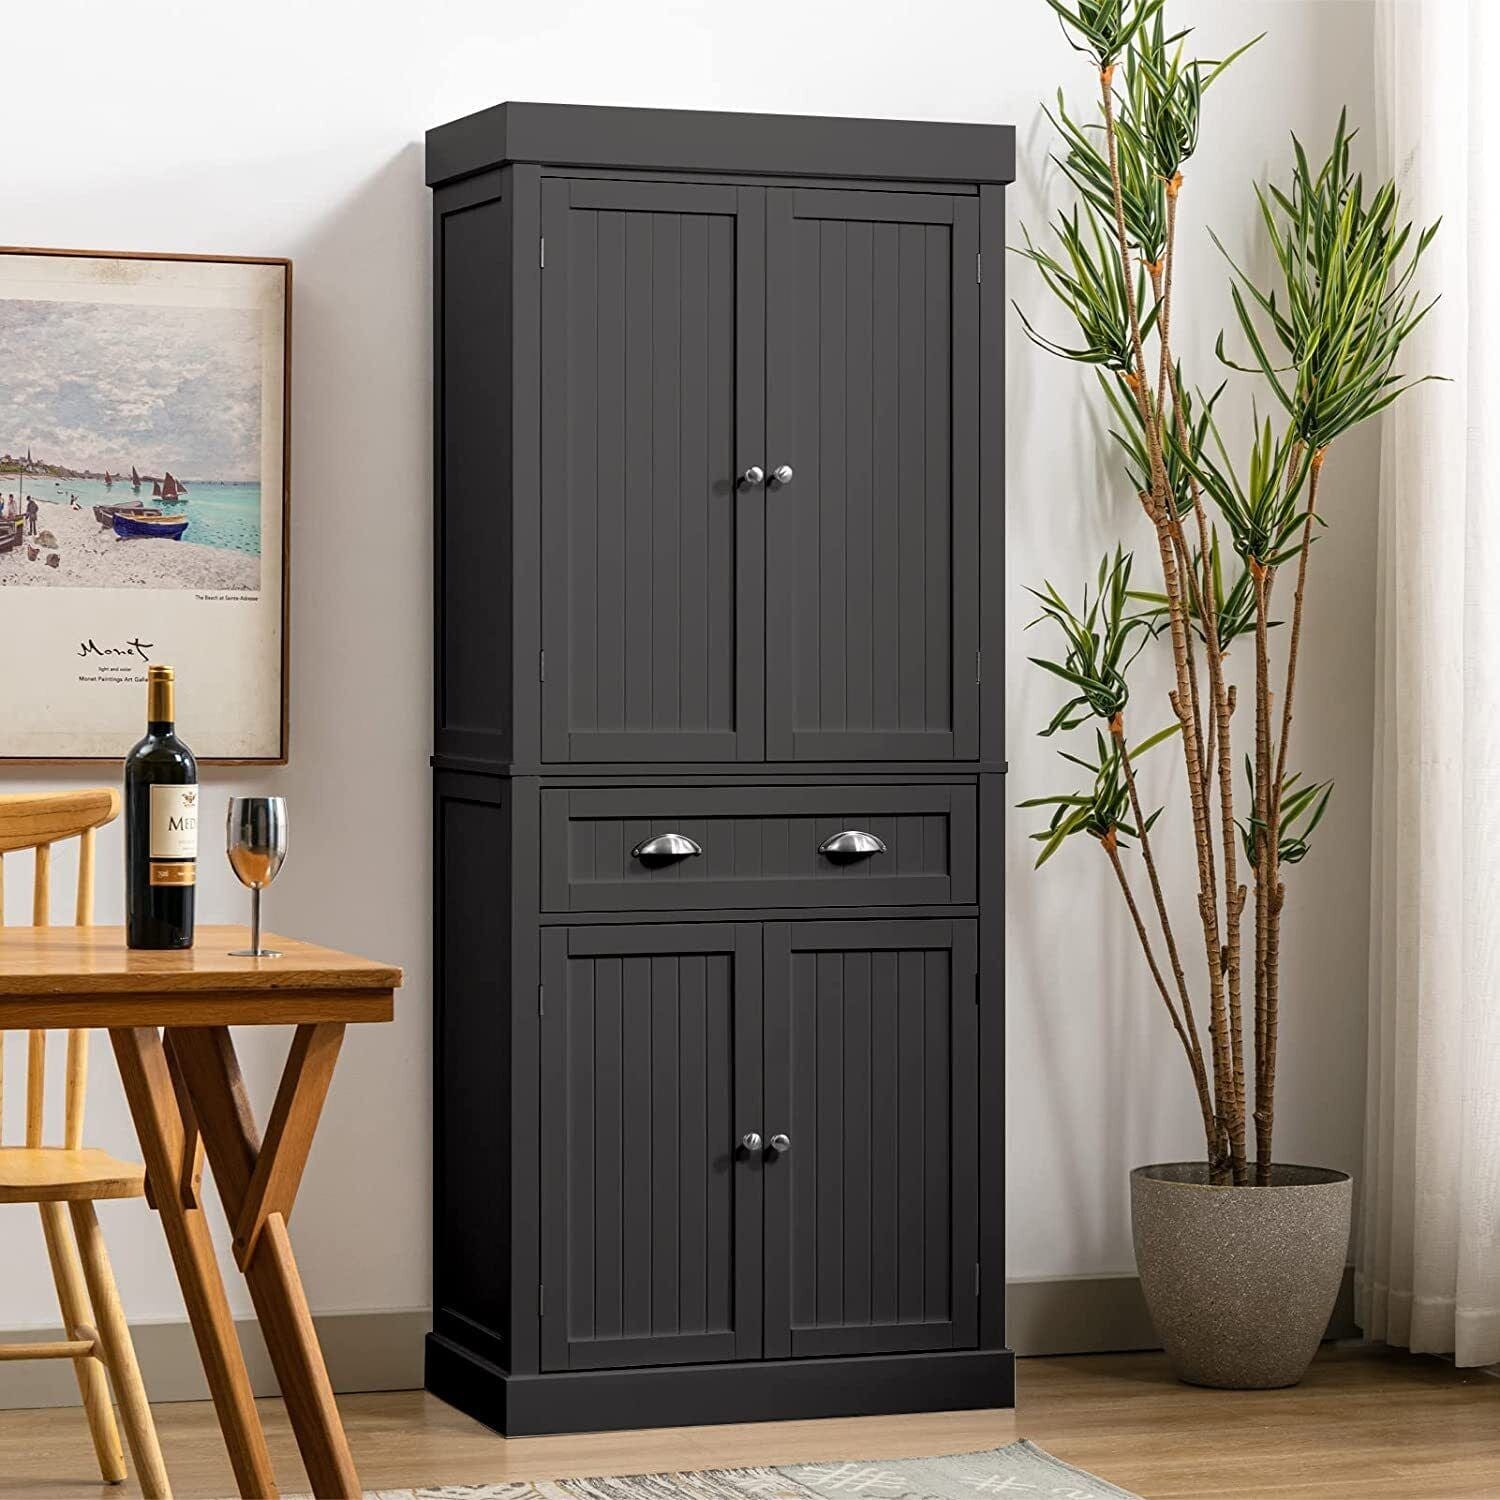 Spacious Wooden Freestanding Kitchen Storage Pantry Closet Cabinet - Merchandise Plug